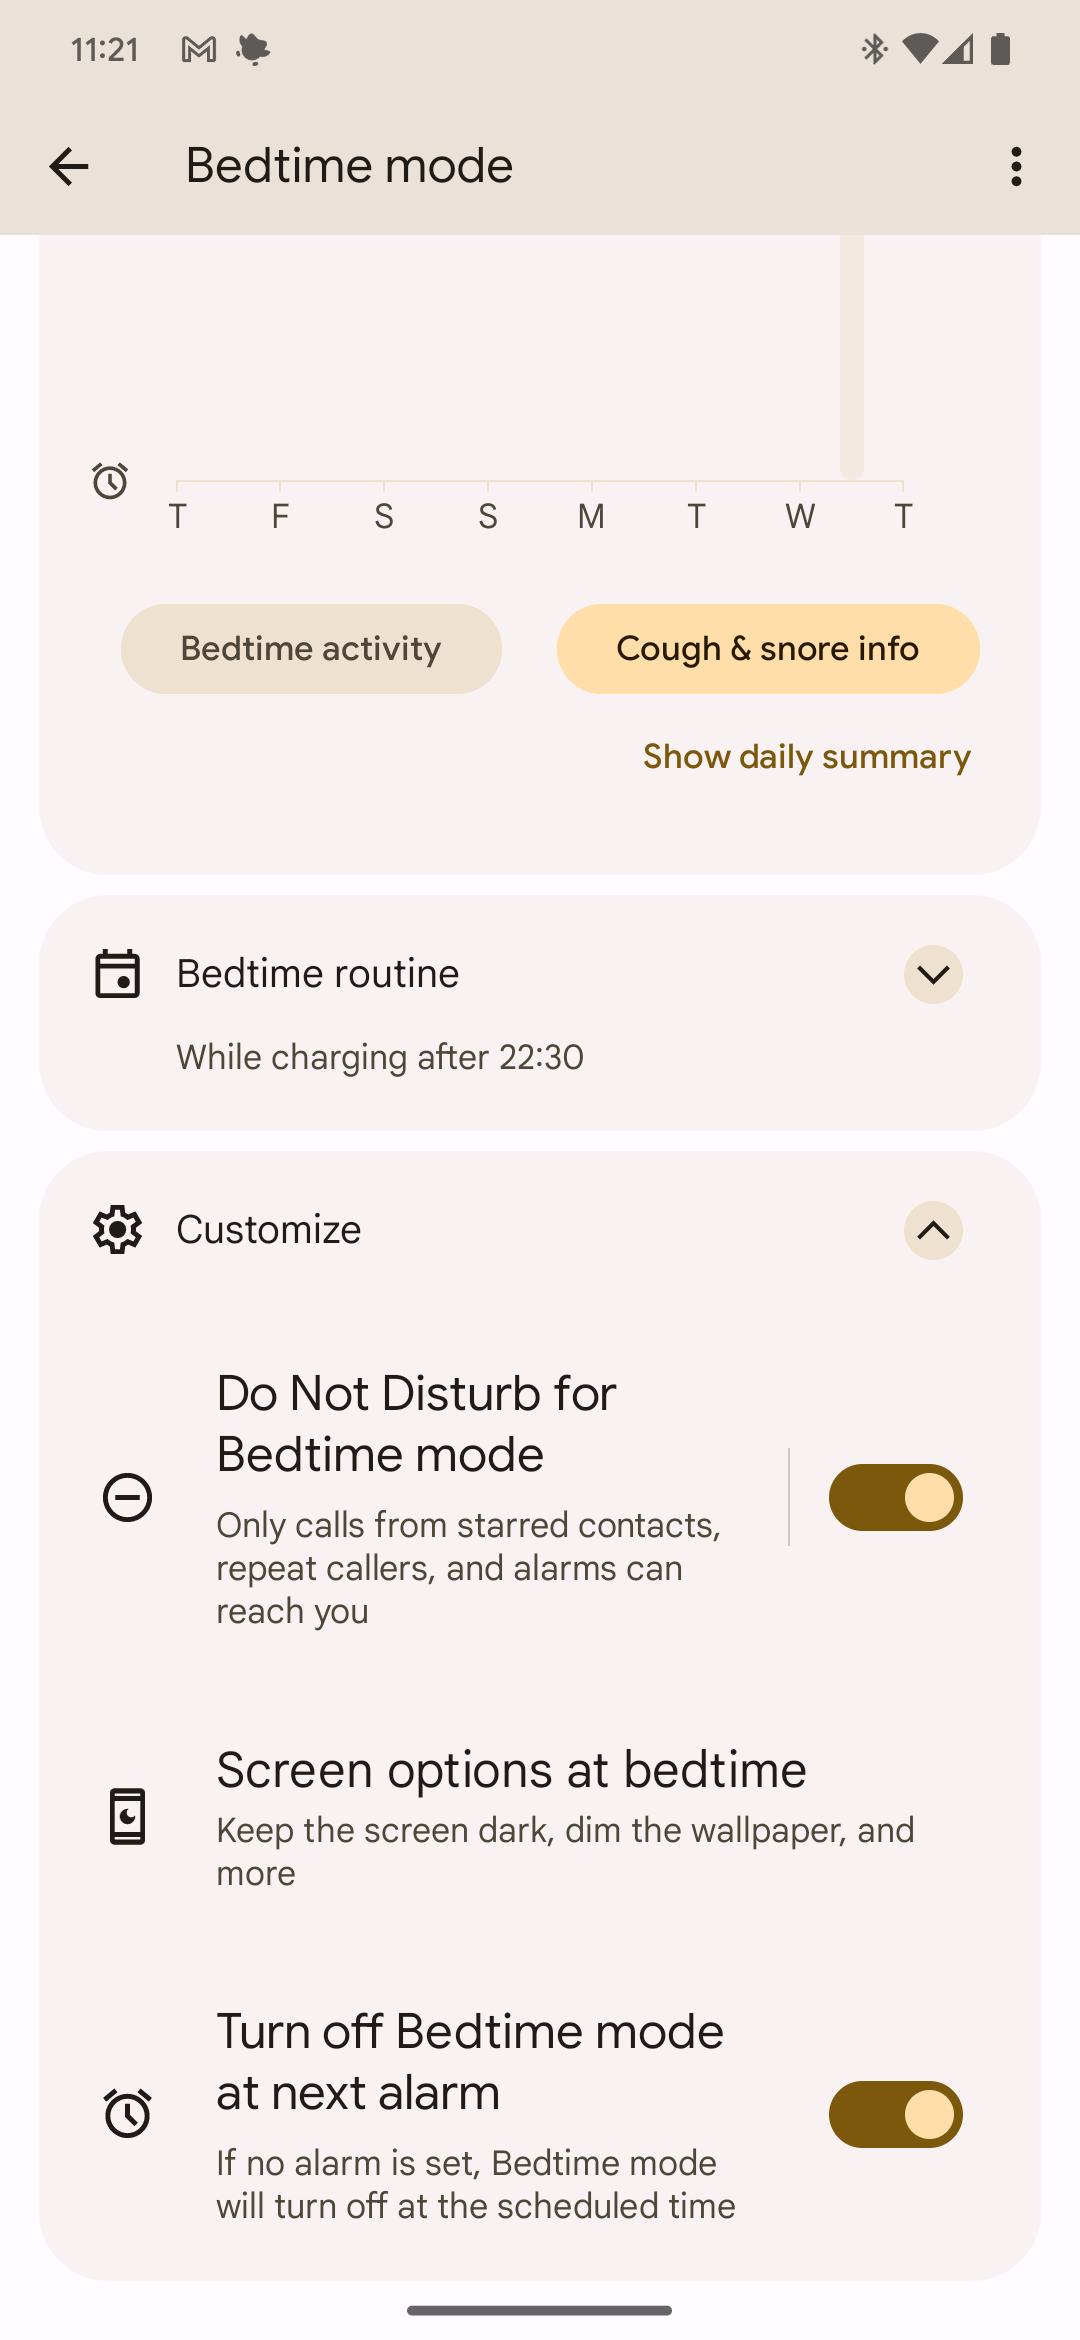 Bedtime Mode settings in the Digital Wellbeing settings on a Google Pixel phone